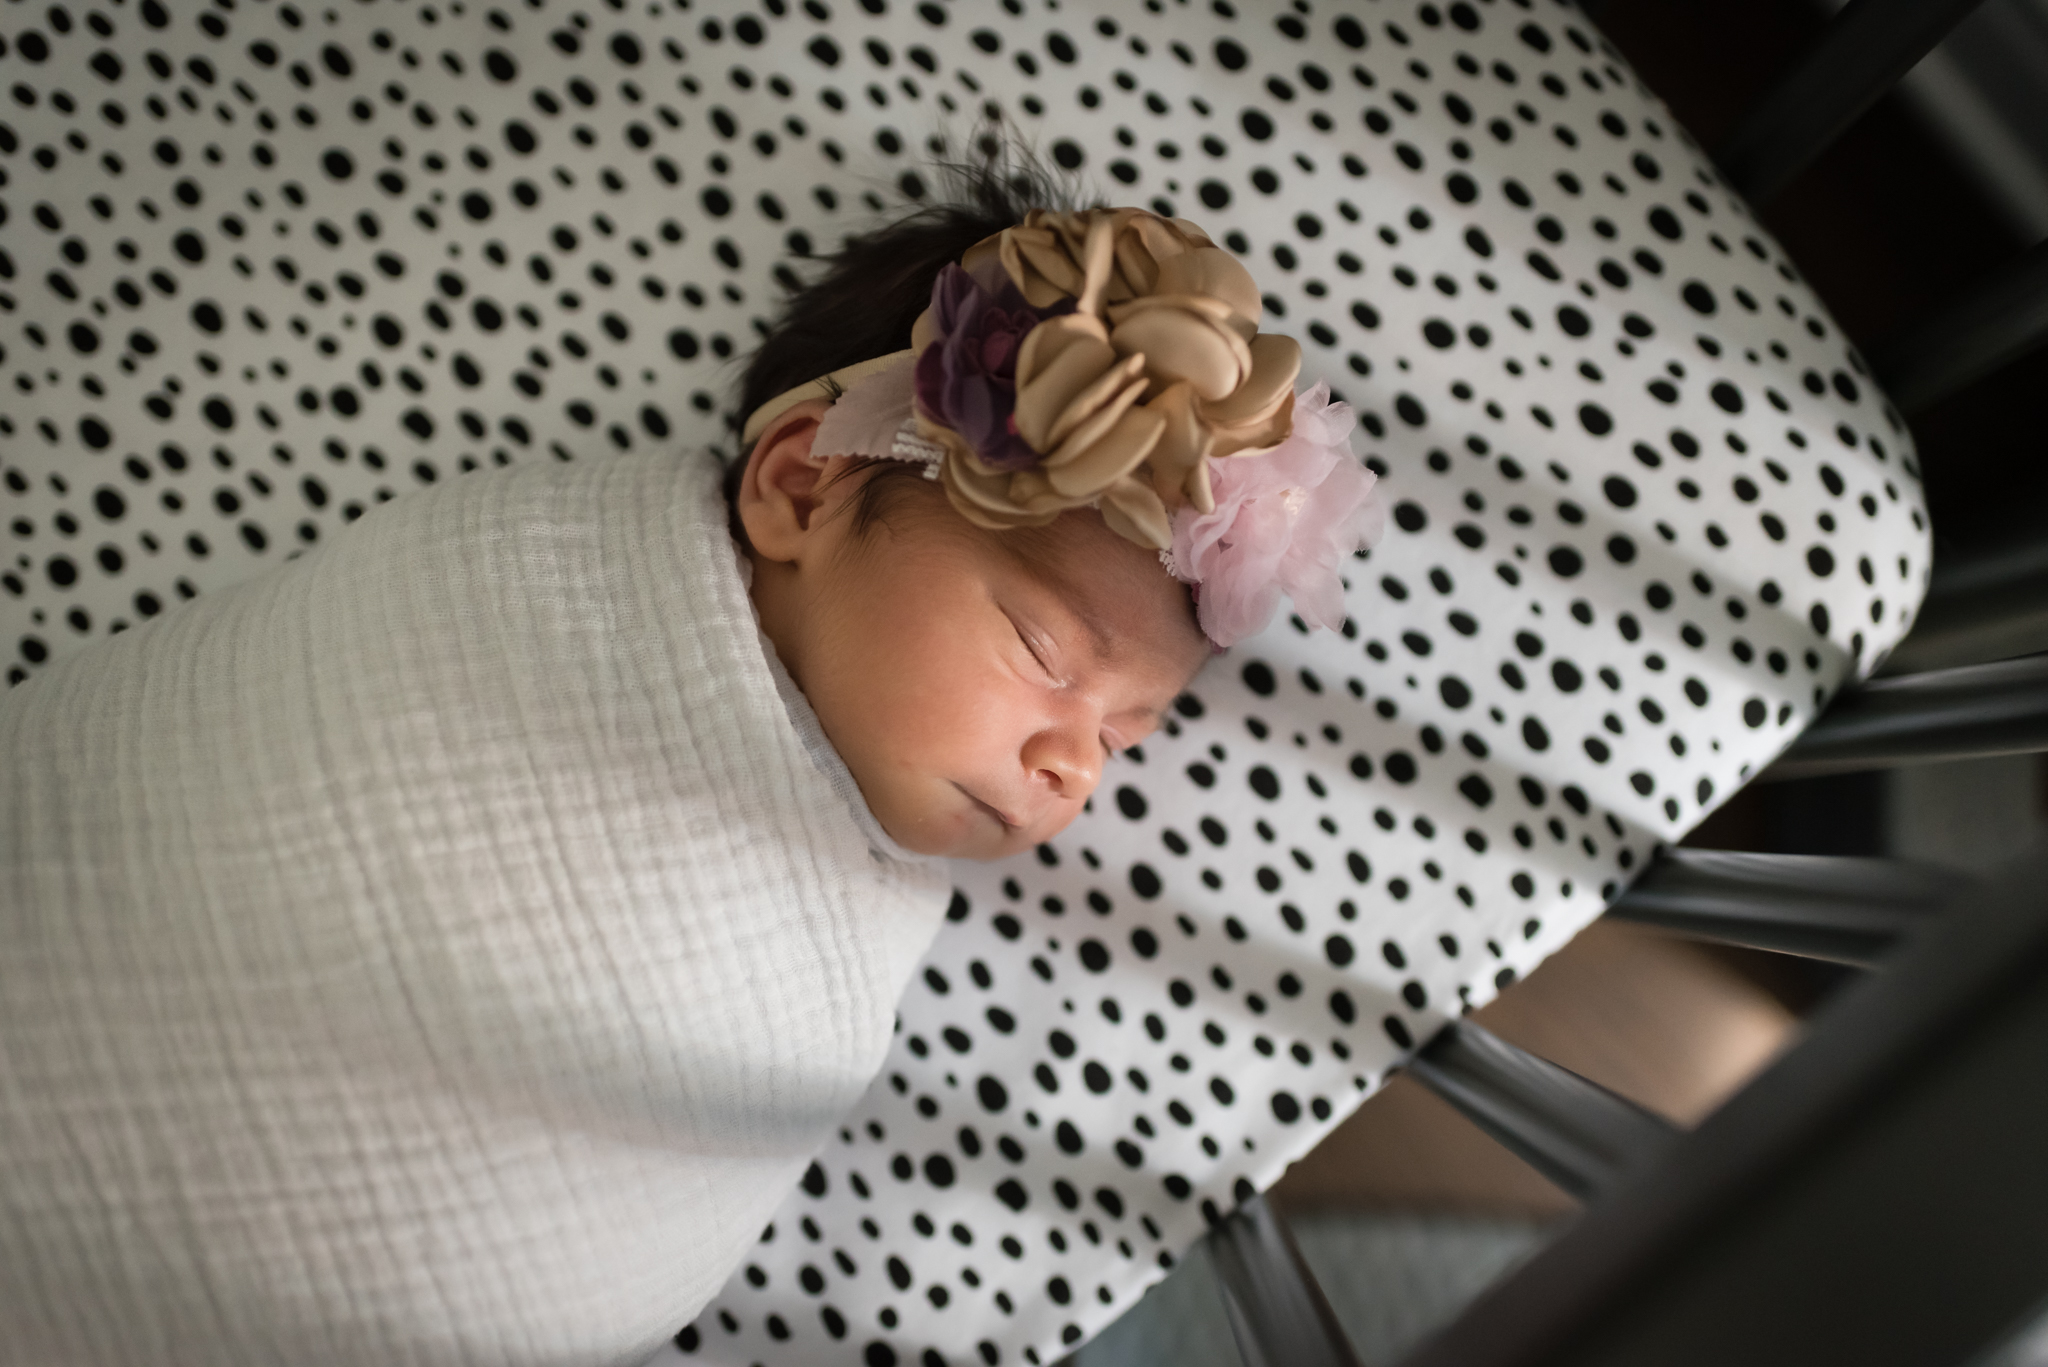 Newborn Picture baby in crib with headband